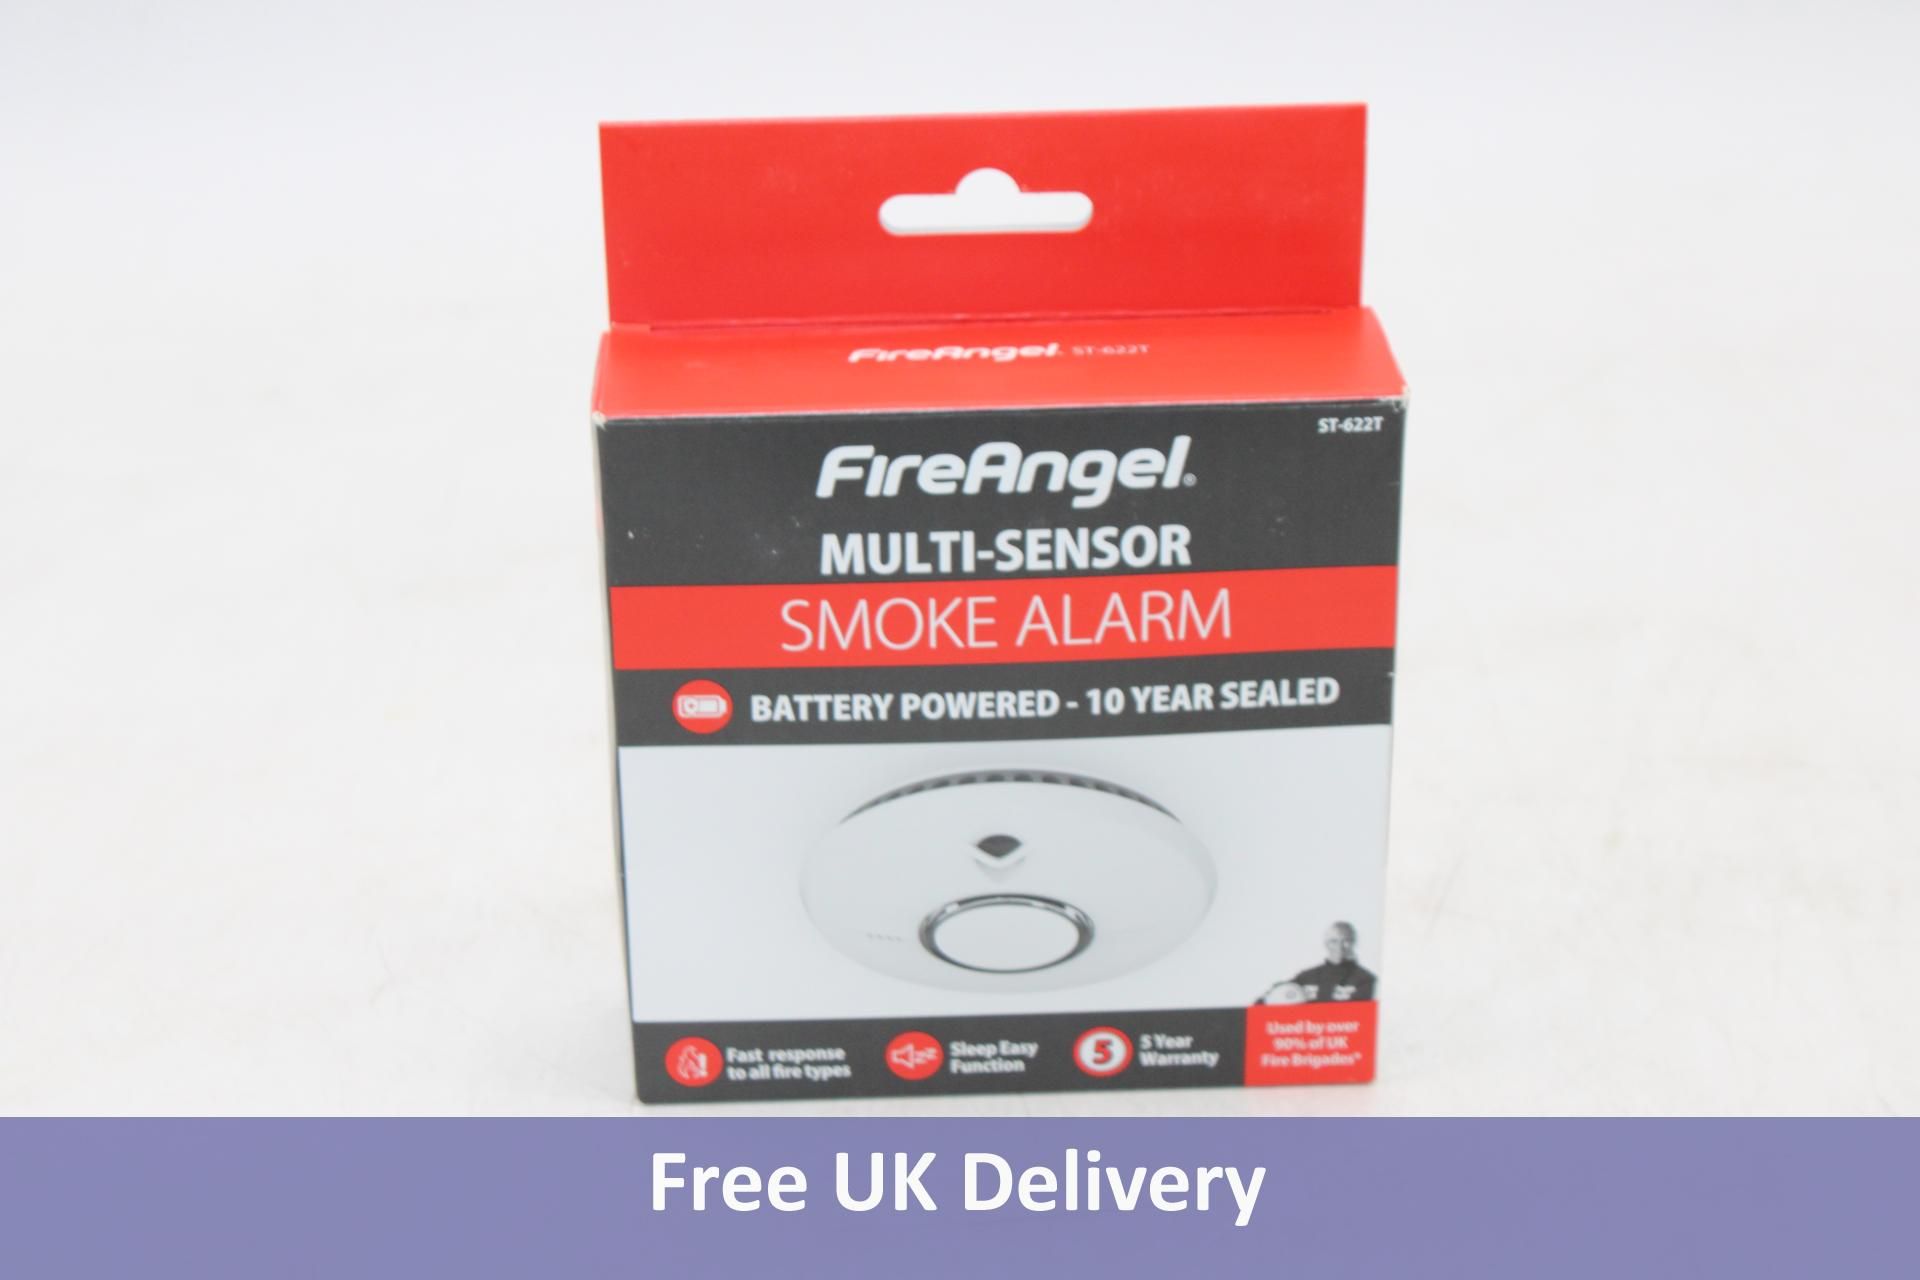 Five Fireange Thermally Enhanced Optical Smoke Alarm, White, ST-622T